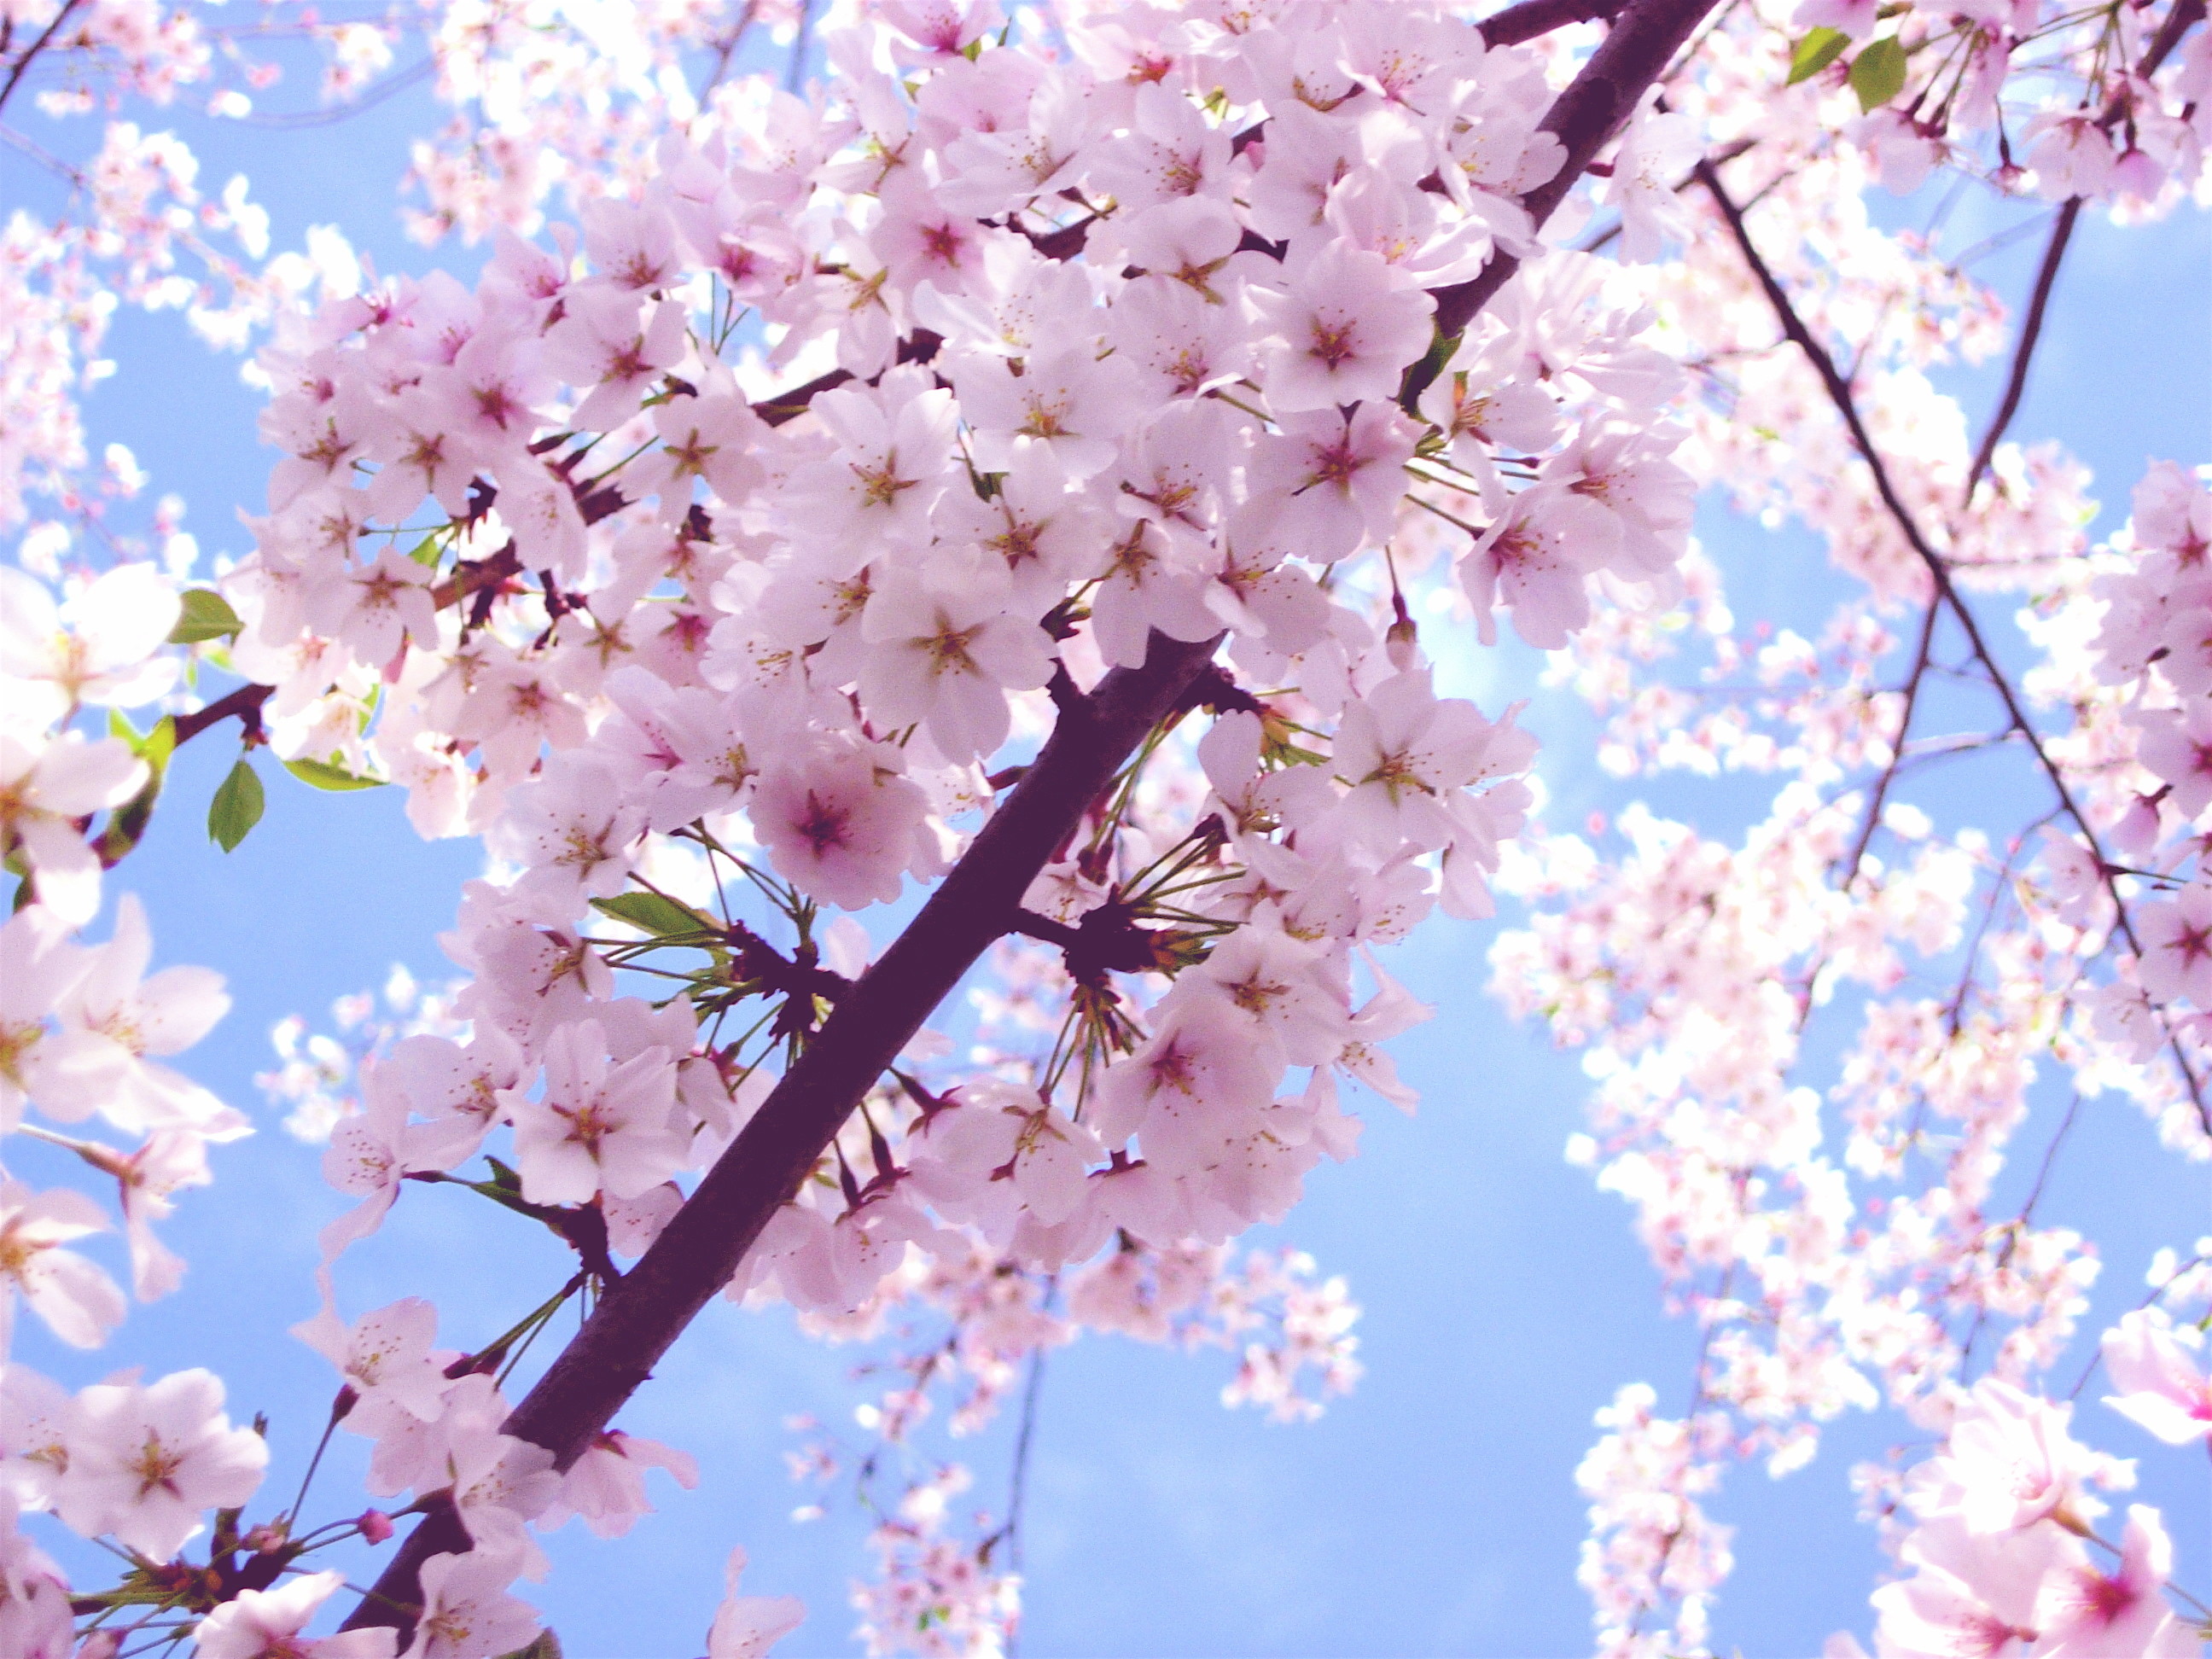 2592x1944 Cherry Blossom images Beautiful Cherry Blossom â¡ HD wallpaper and  background photos